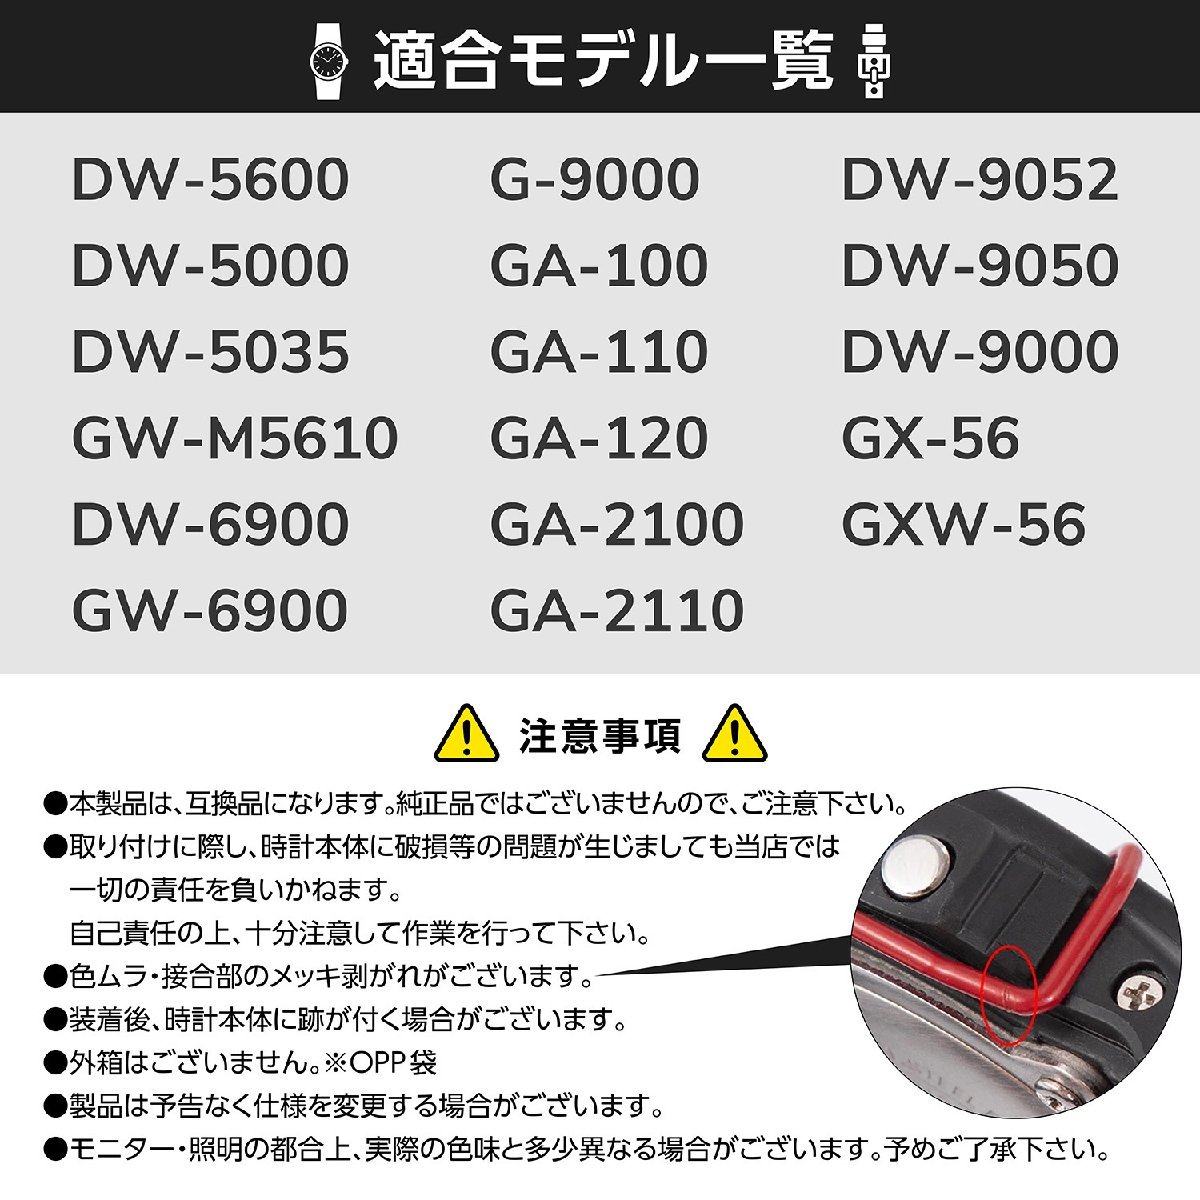 G-SHOCK カスタム パーツ バンパー ガード プロテクター ブルバー 互換品 ブラック GA110/100/120用_画像5